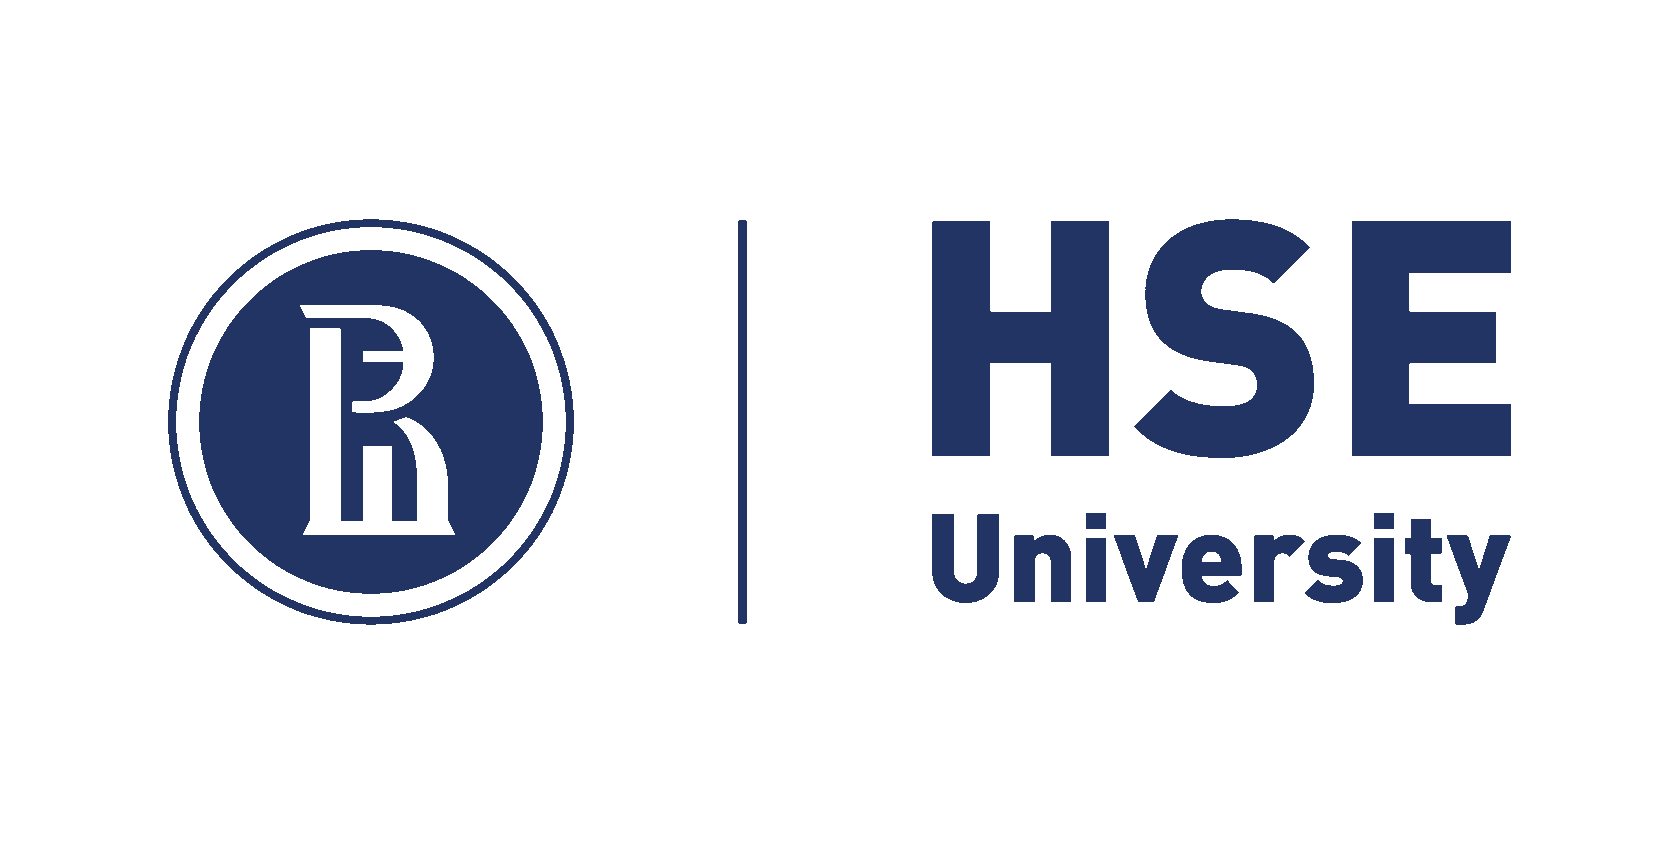 HSE University